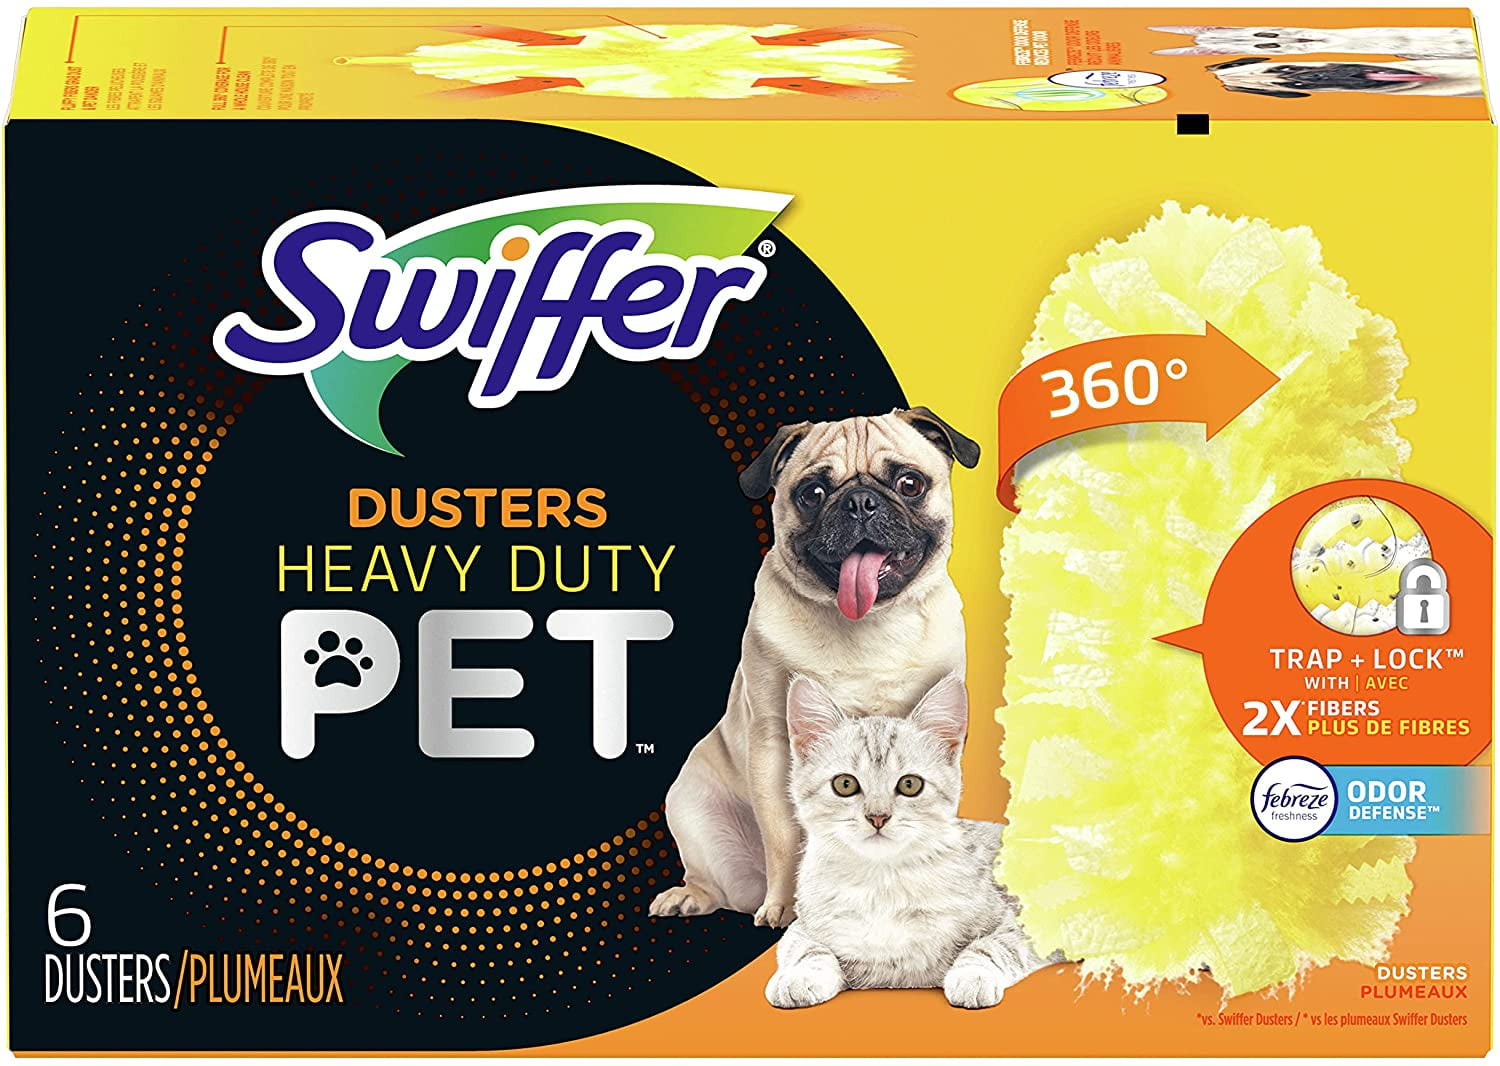 Swiffer 360 Dusters Heavy Duty Pet Refills Febreze Odor Defense 6 Count 